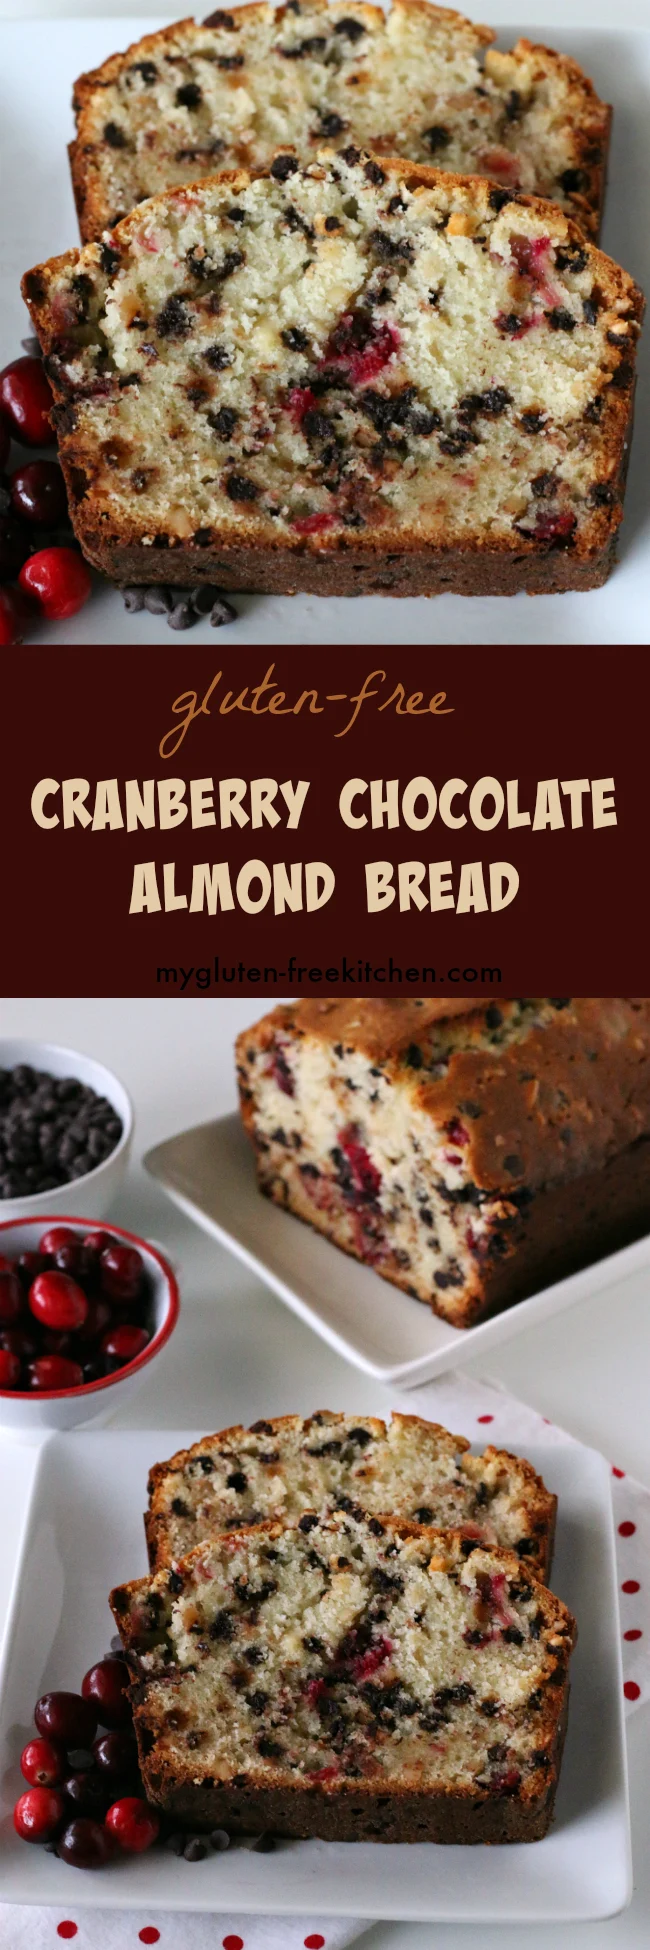 Gluten-free Cranberry Chocolate Almond Bread recipe